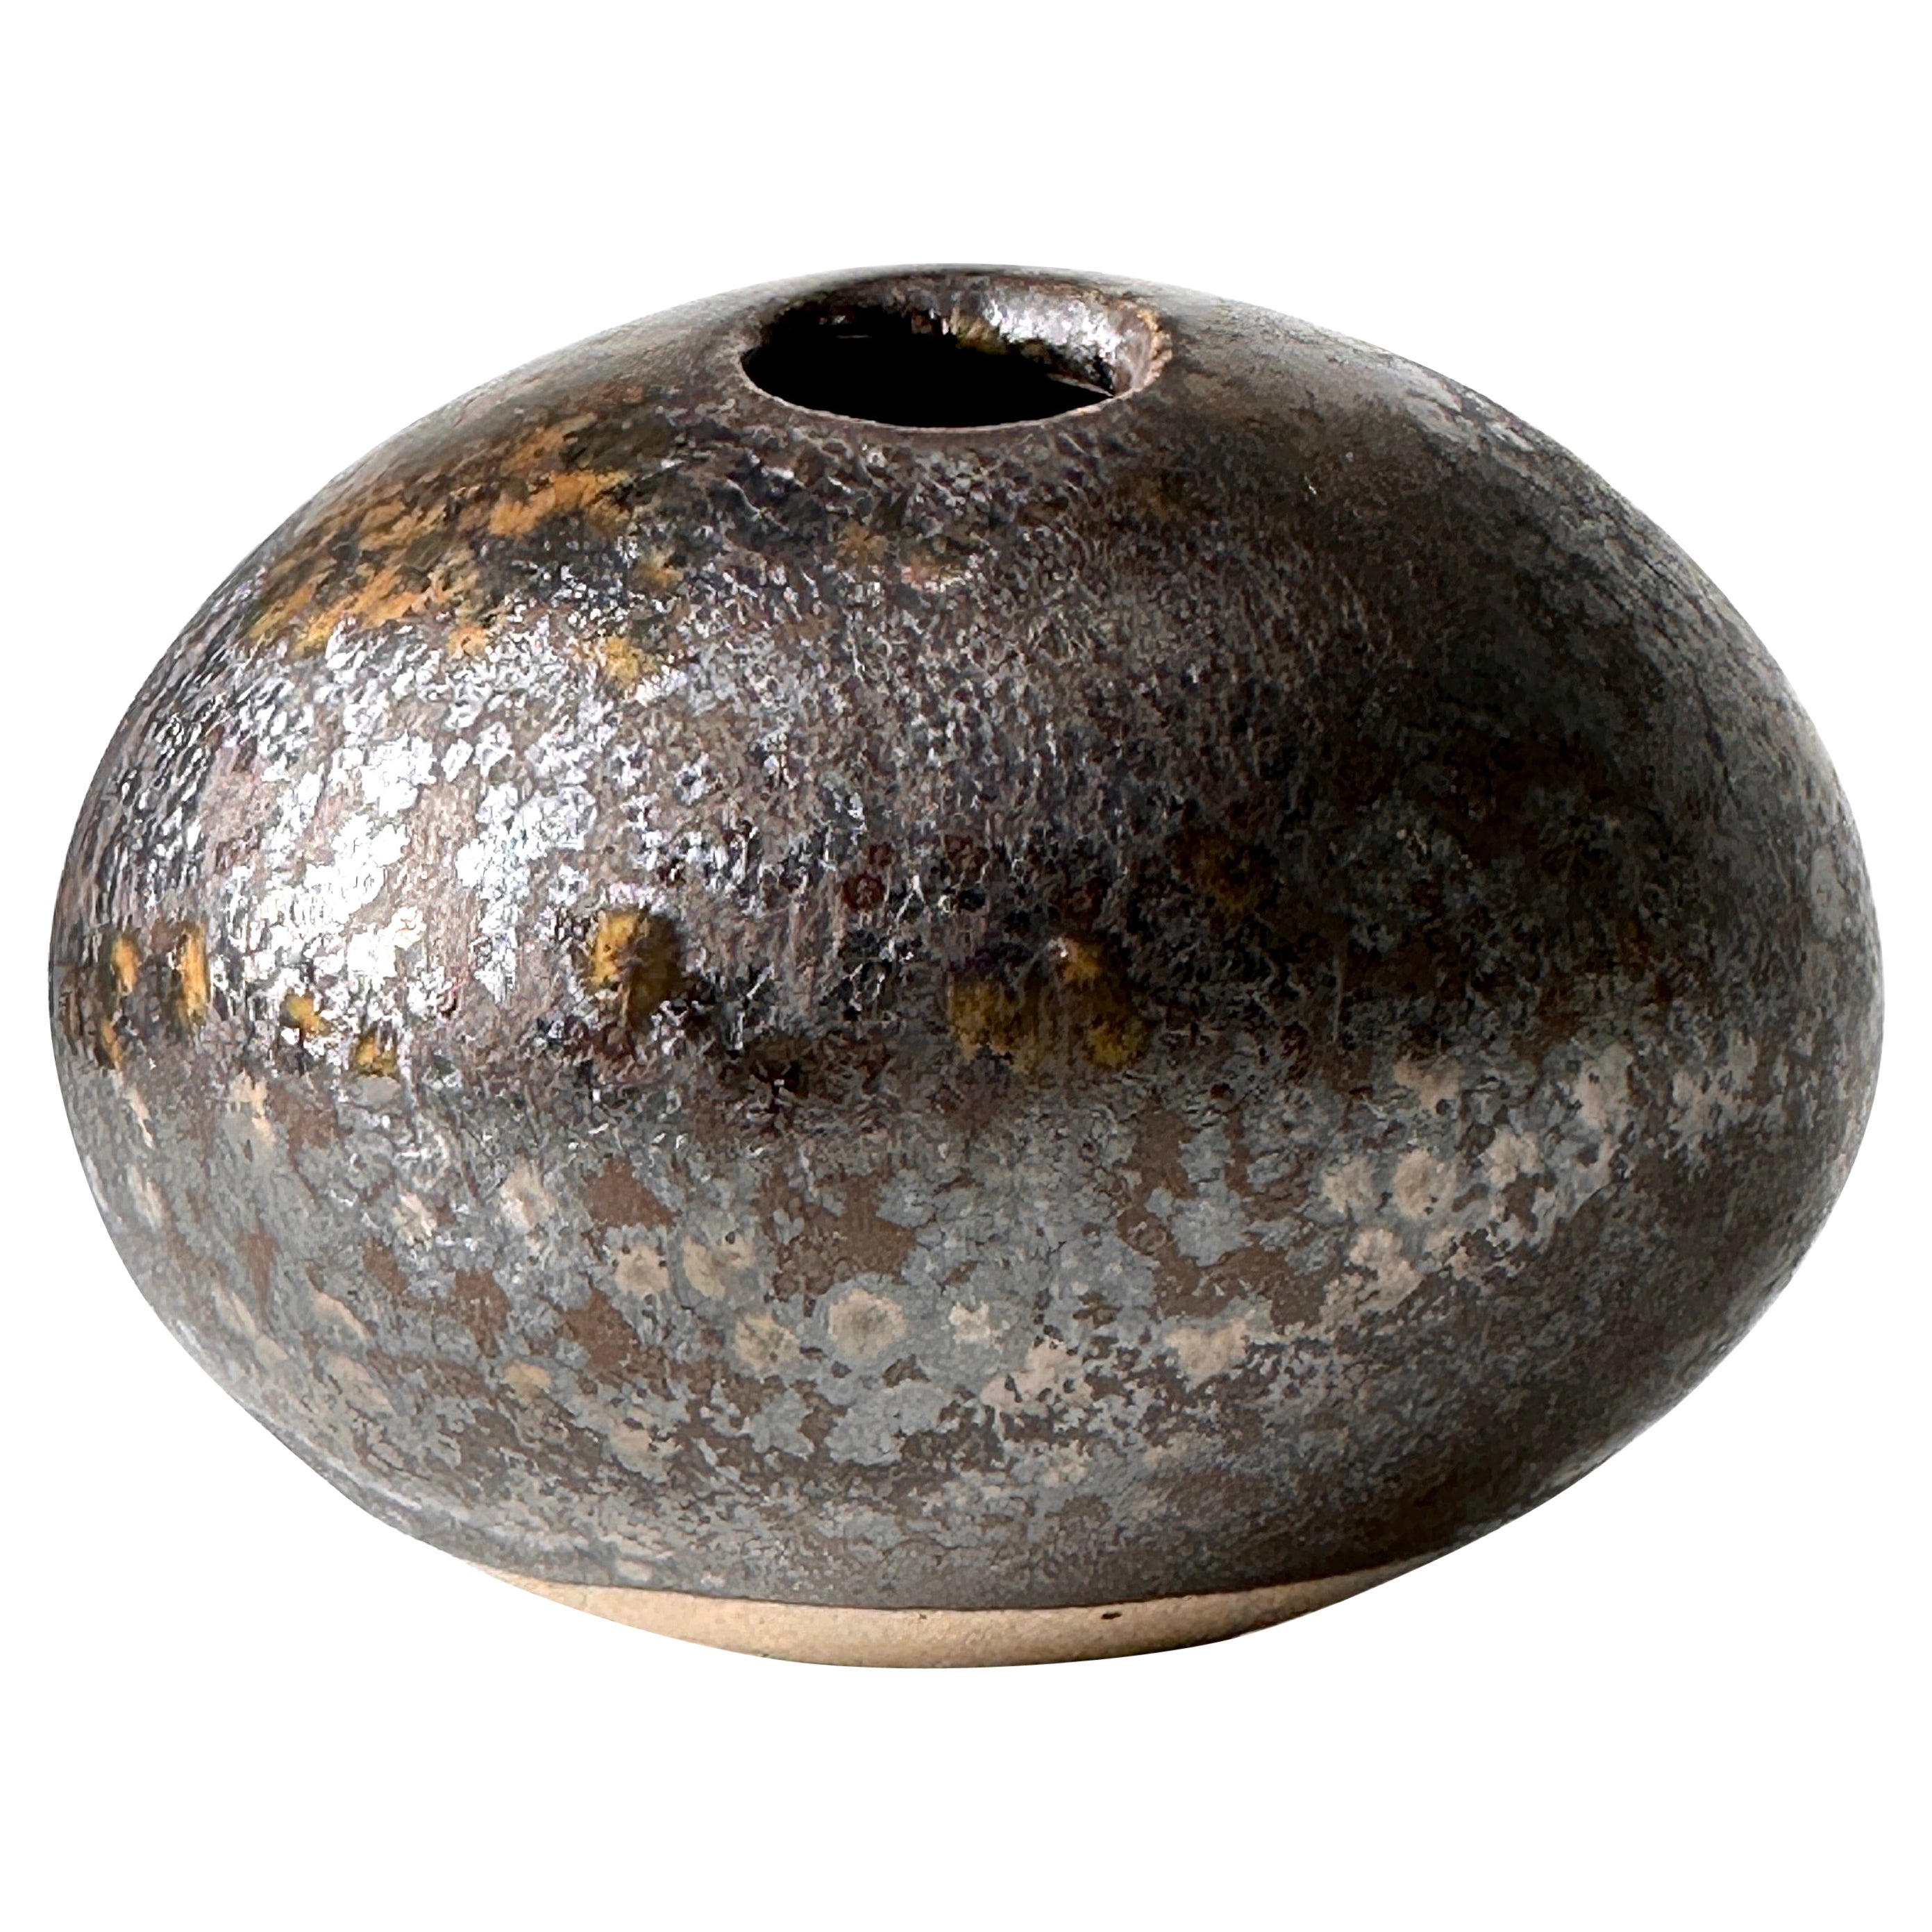 David Shaner River Rock Glazed Stoneware Ceramic Weed Vase Sculpture 1990s